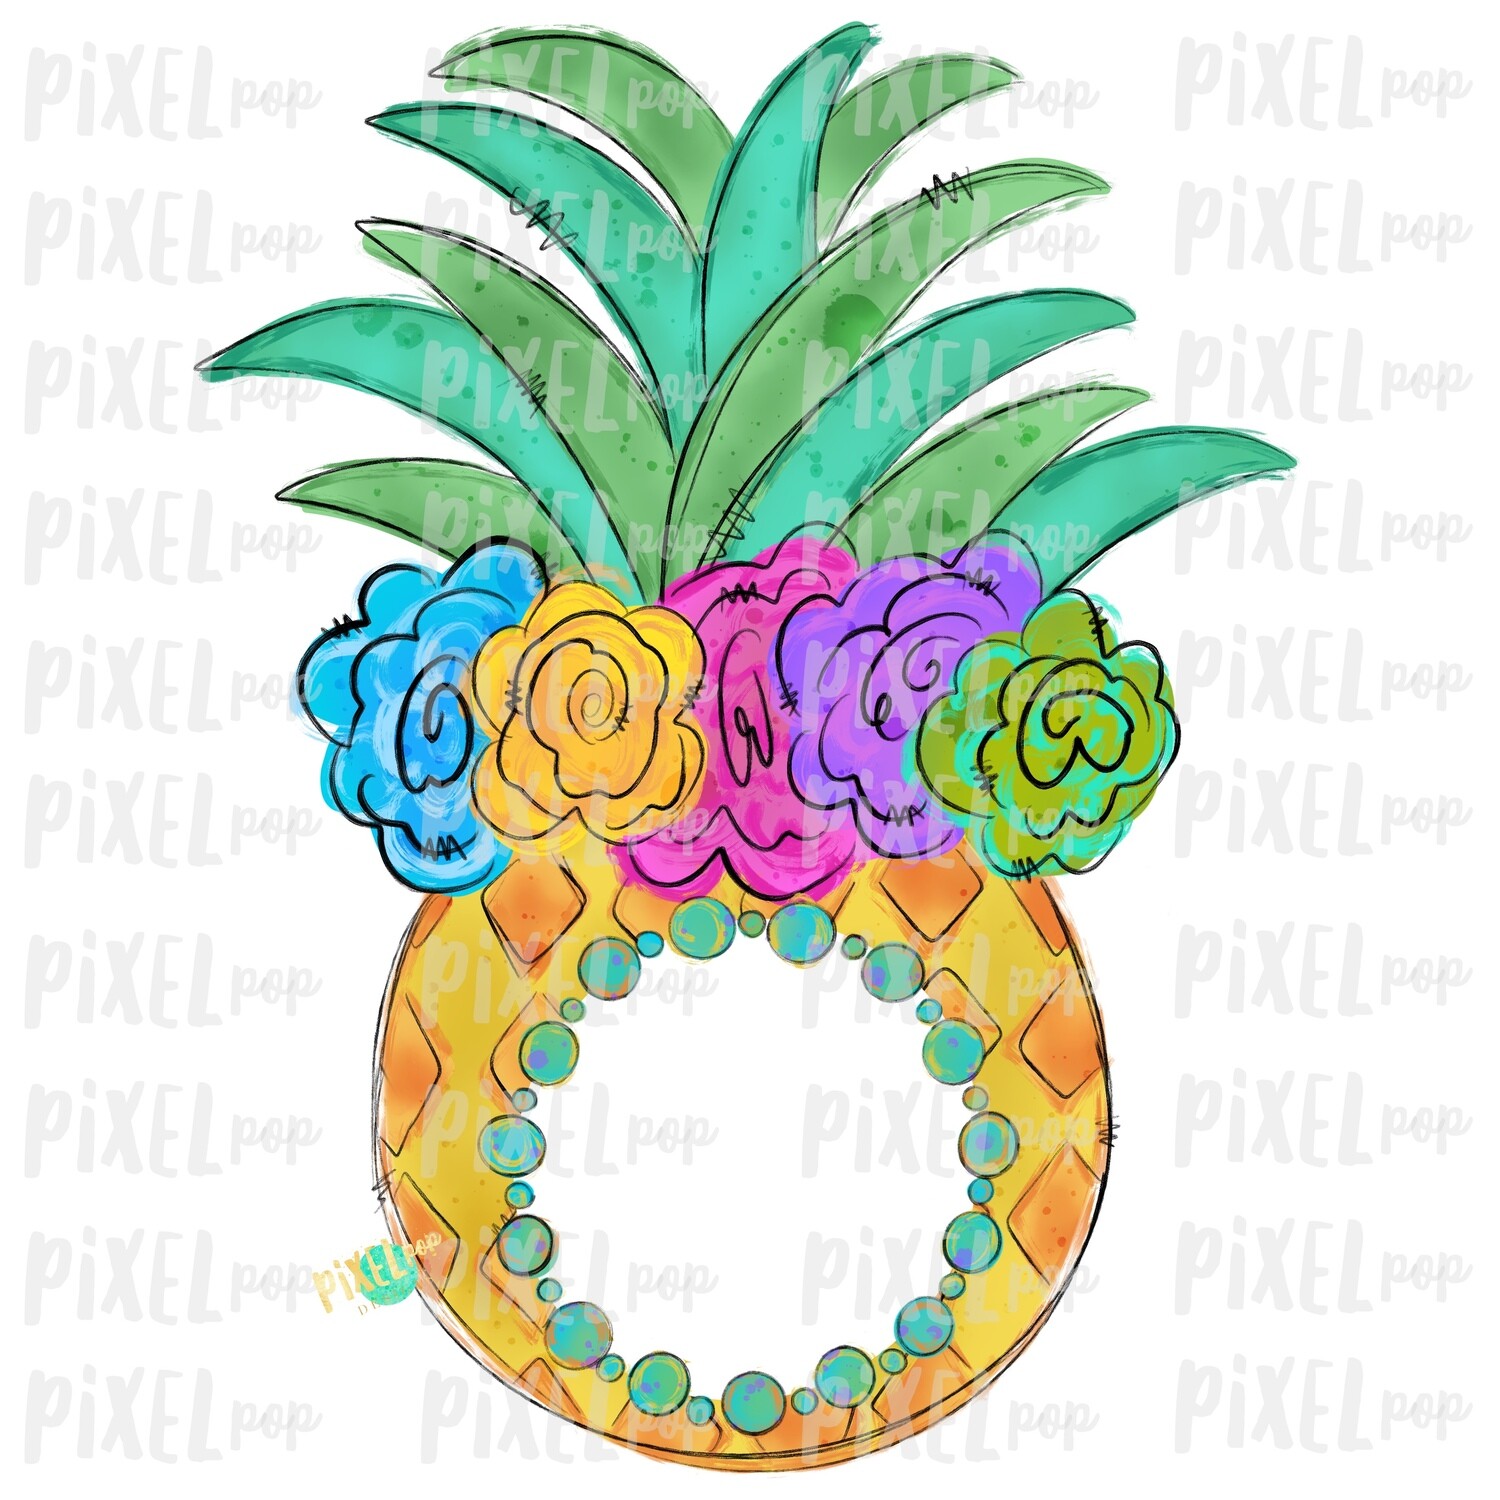 Pineapple with Flower Crown Design | Sublimation | Monogram blank | Fruit | Hand Drawn PNG | Digital Download | Printable Art | Clip Art